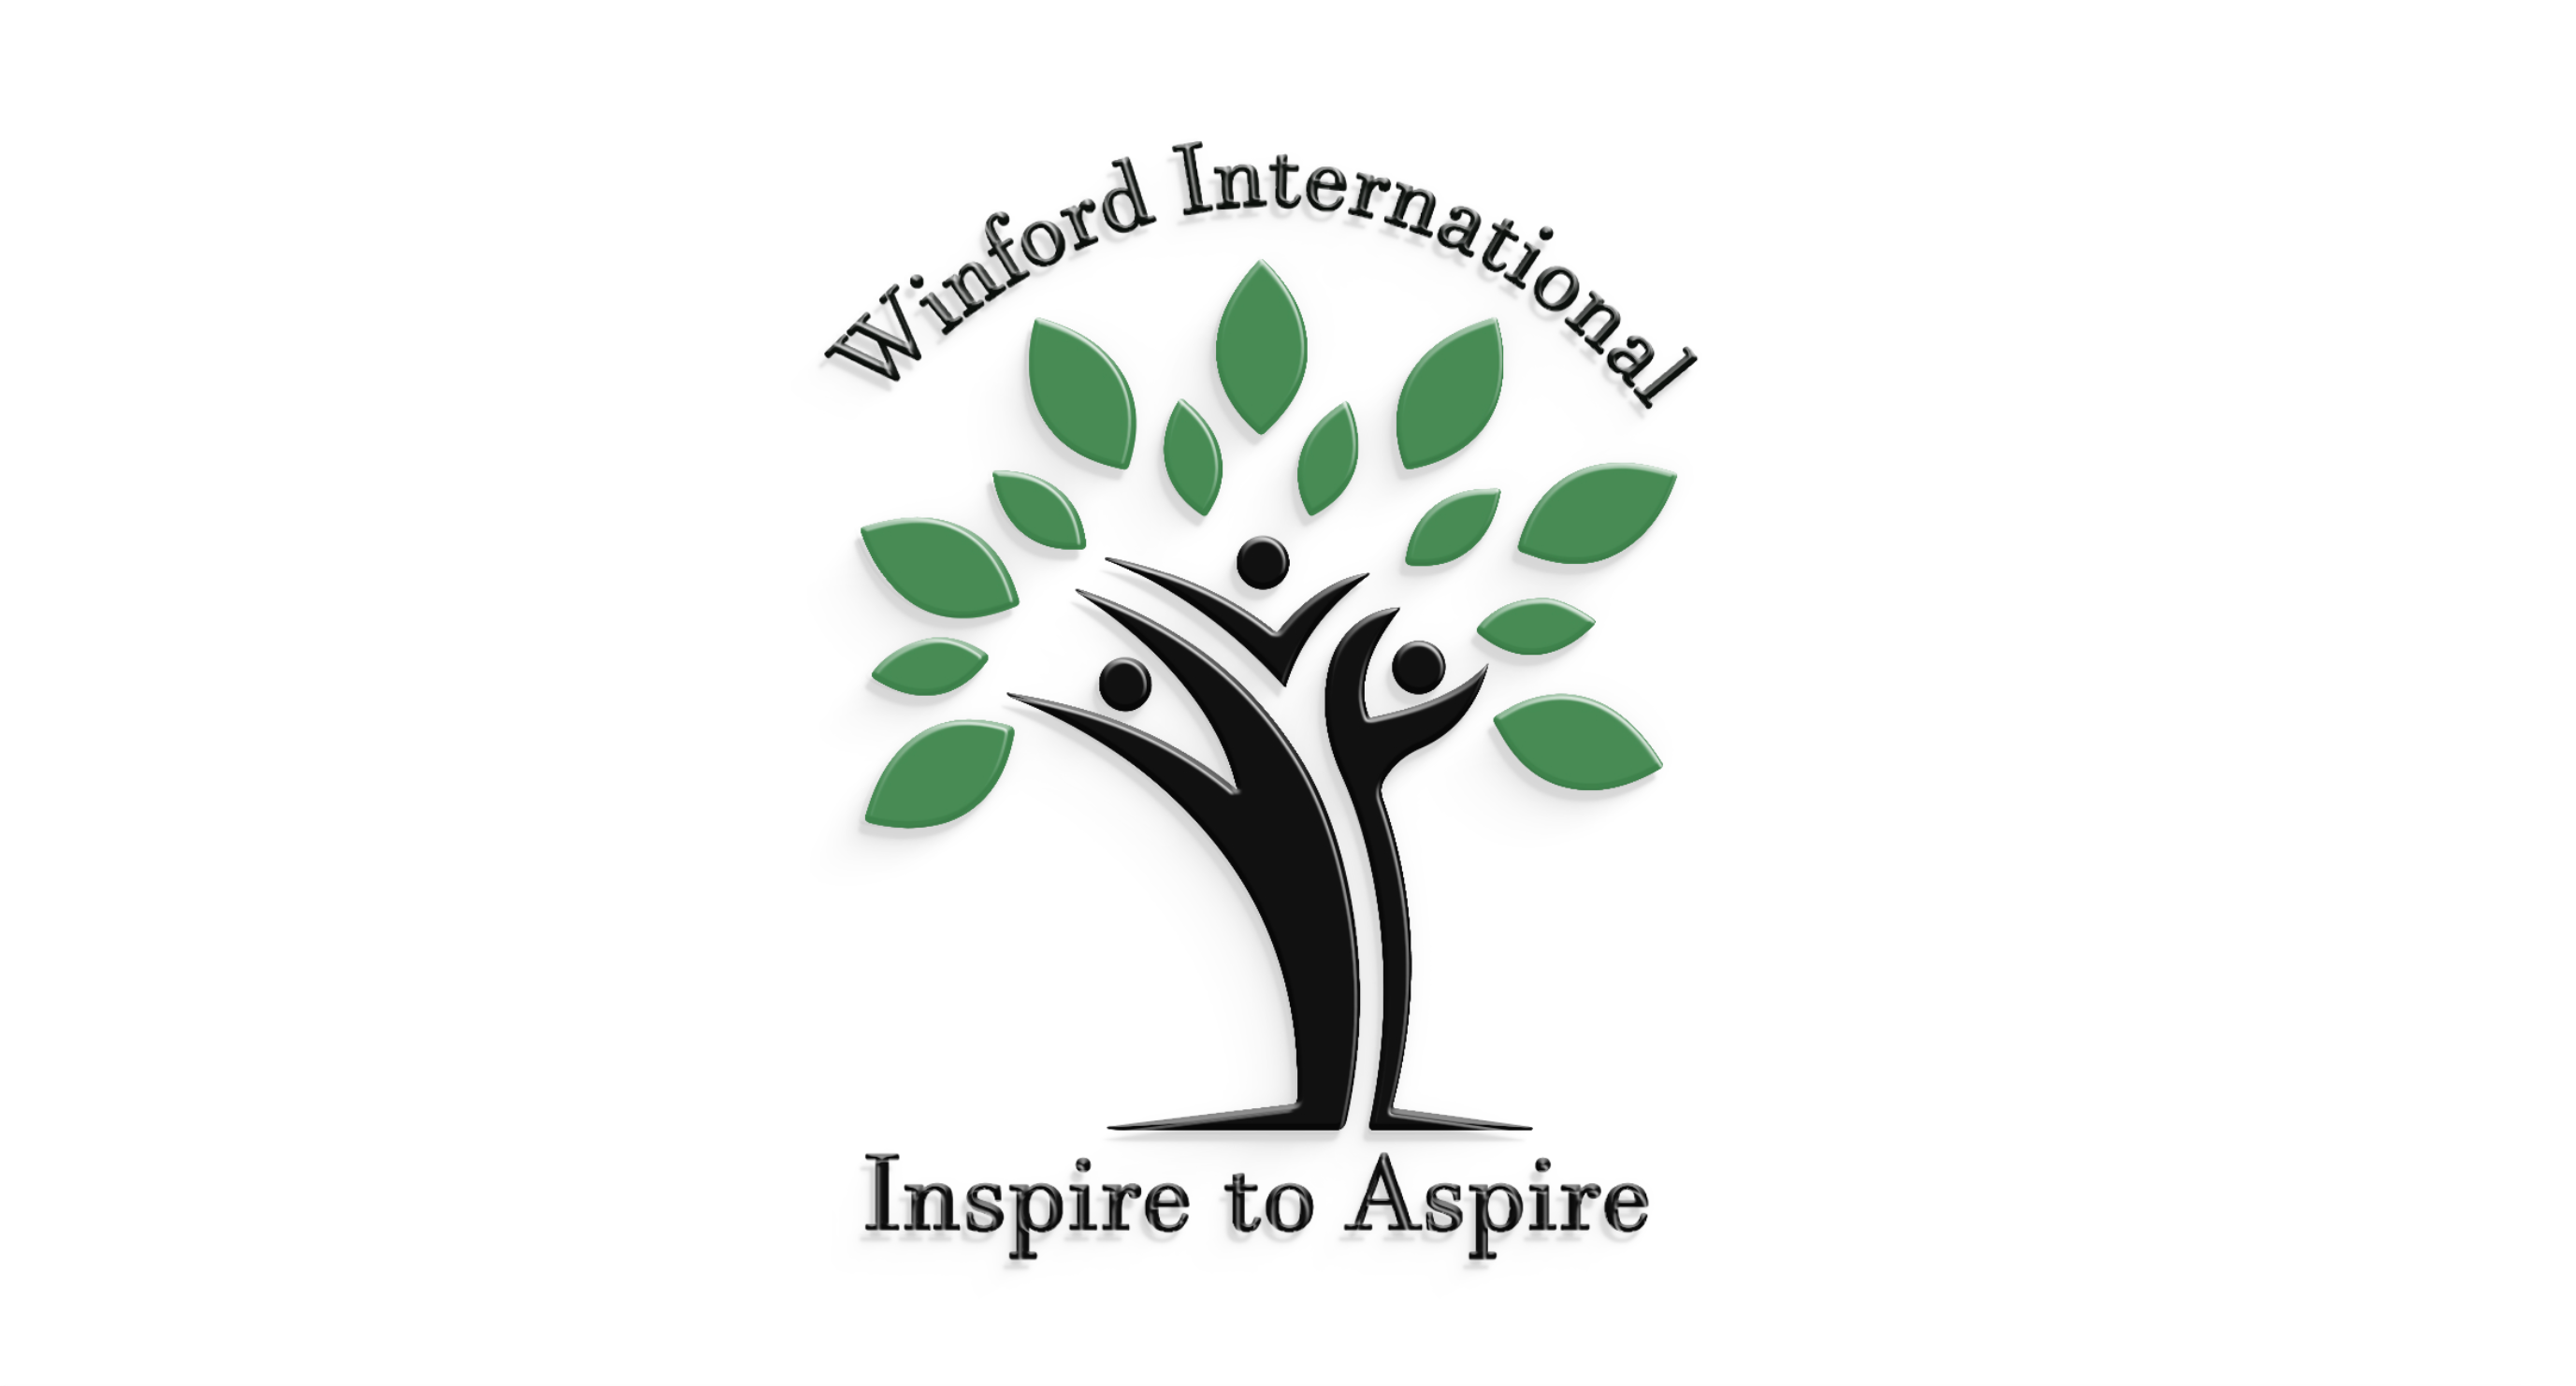 Winford International Online School